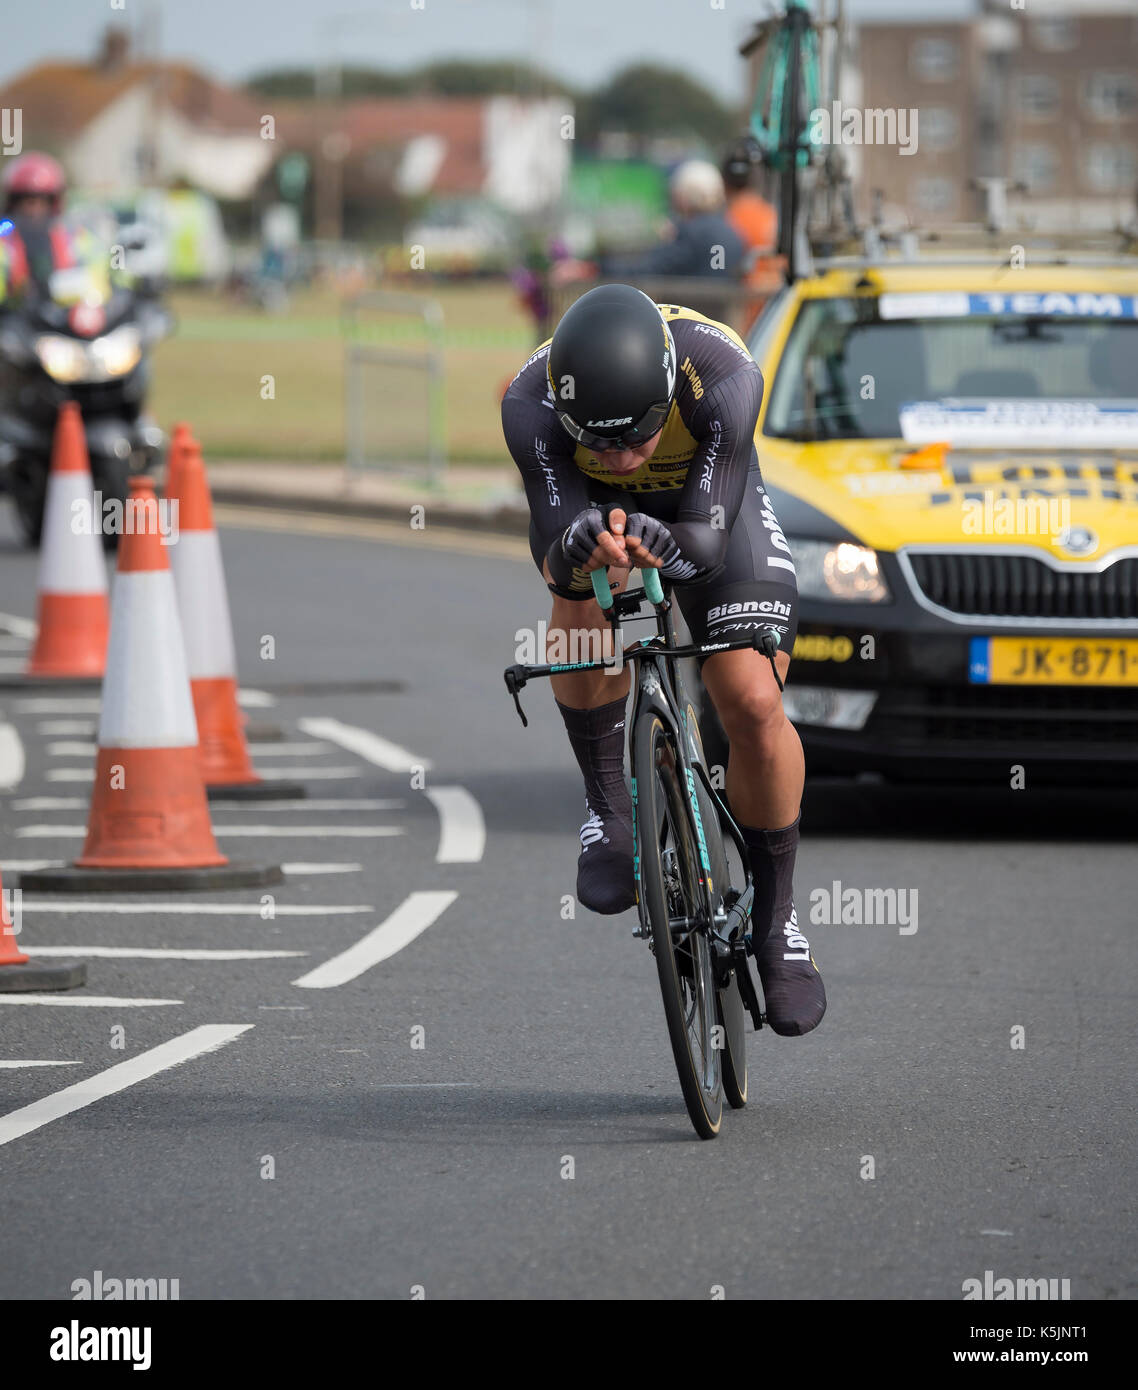 Dylan GROENEWEGEN, Lotto Jumbo, Tour of Britain cycle race stage 5 timetrial at Clacton on sea, UK Stock Photo